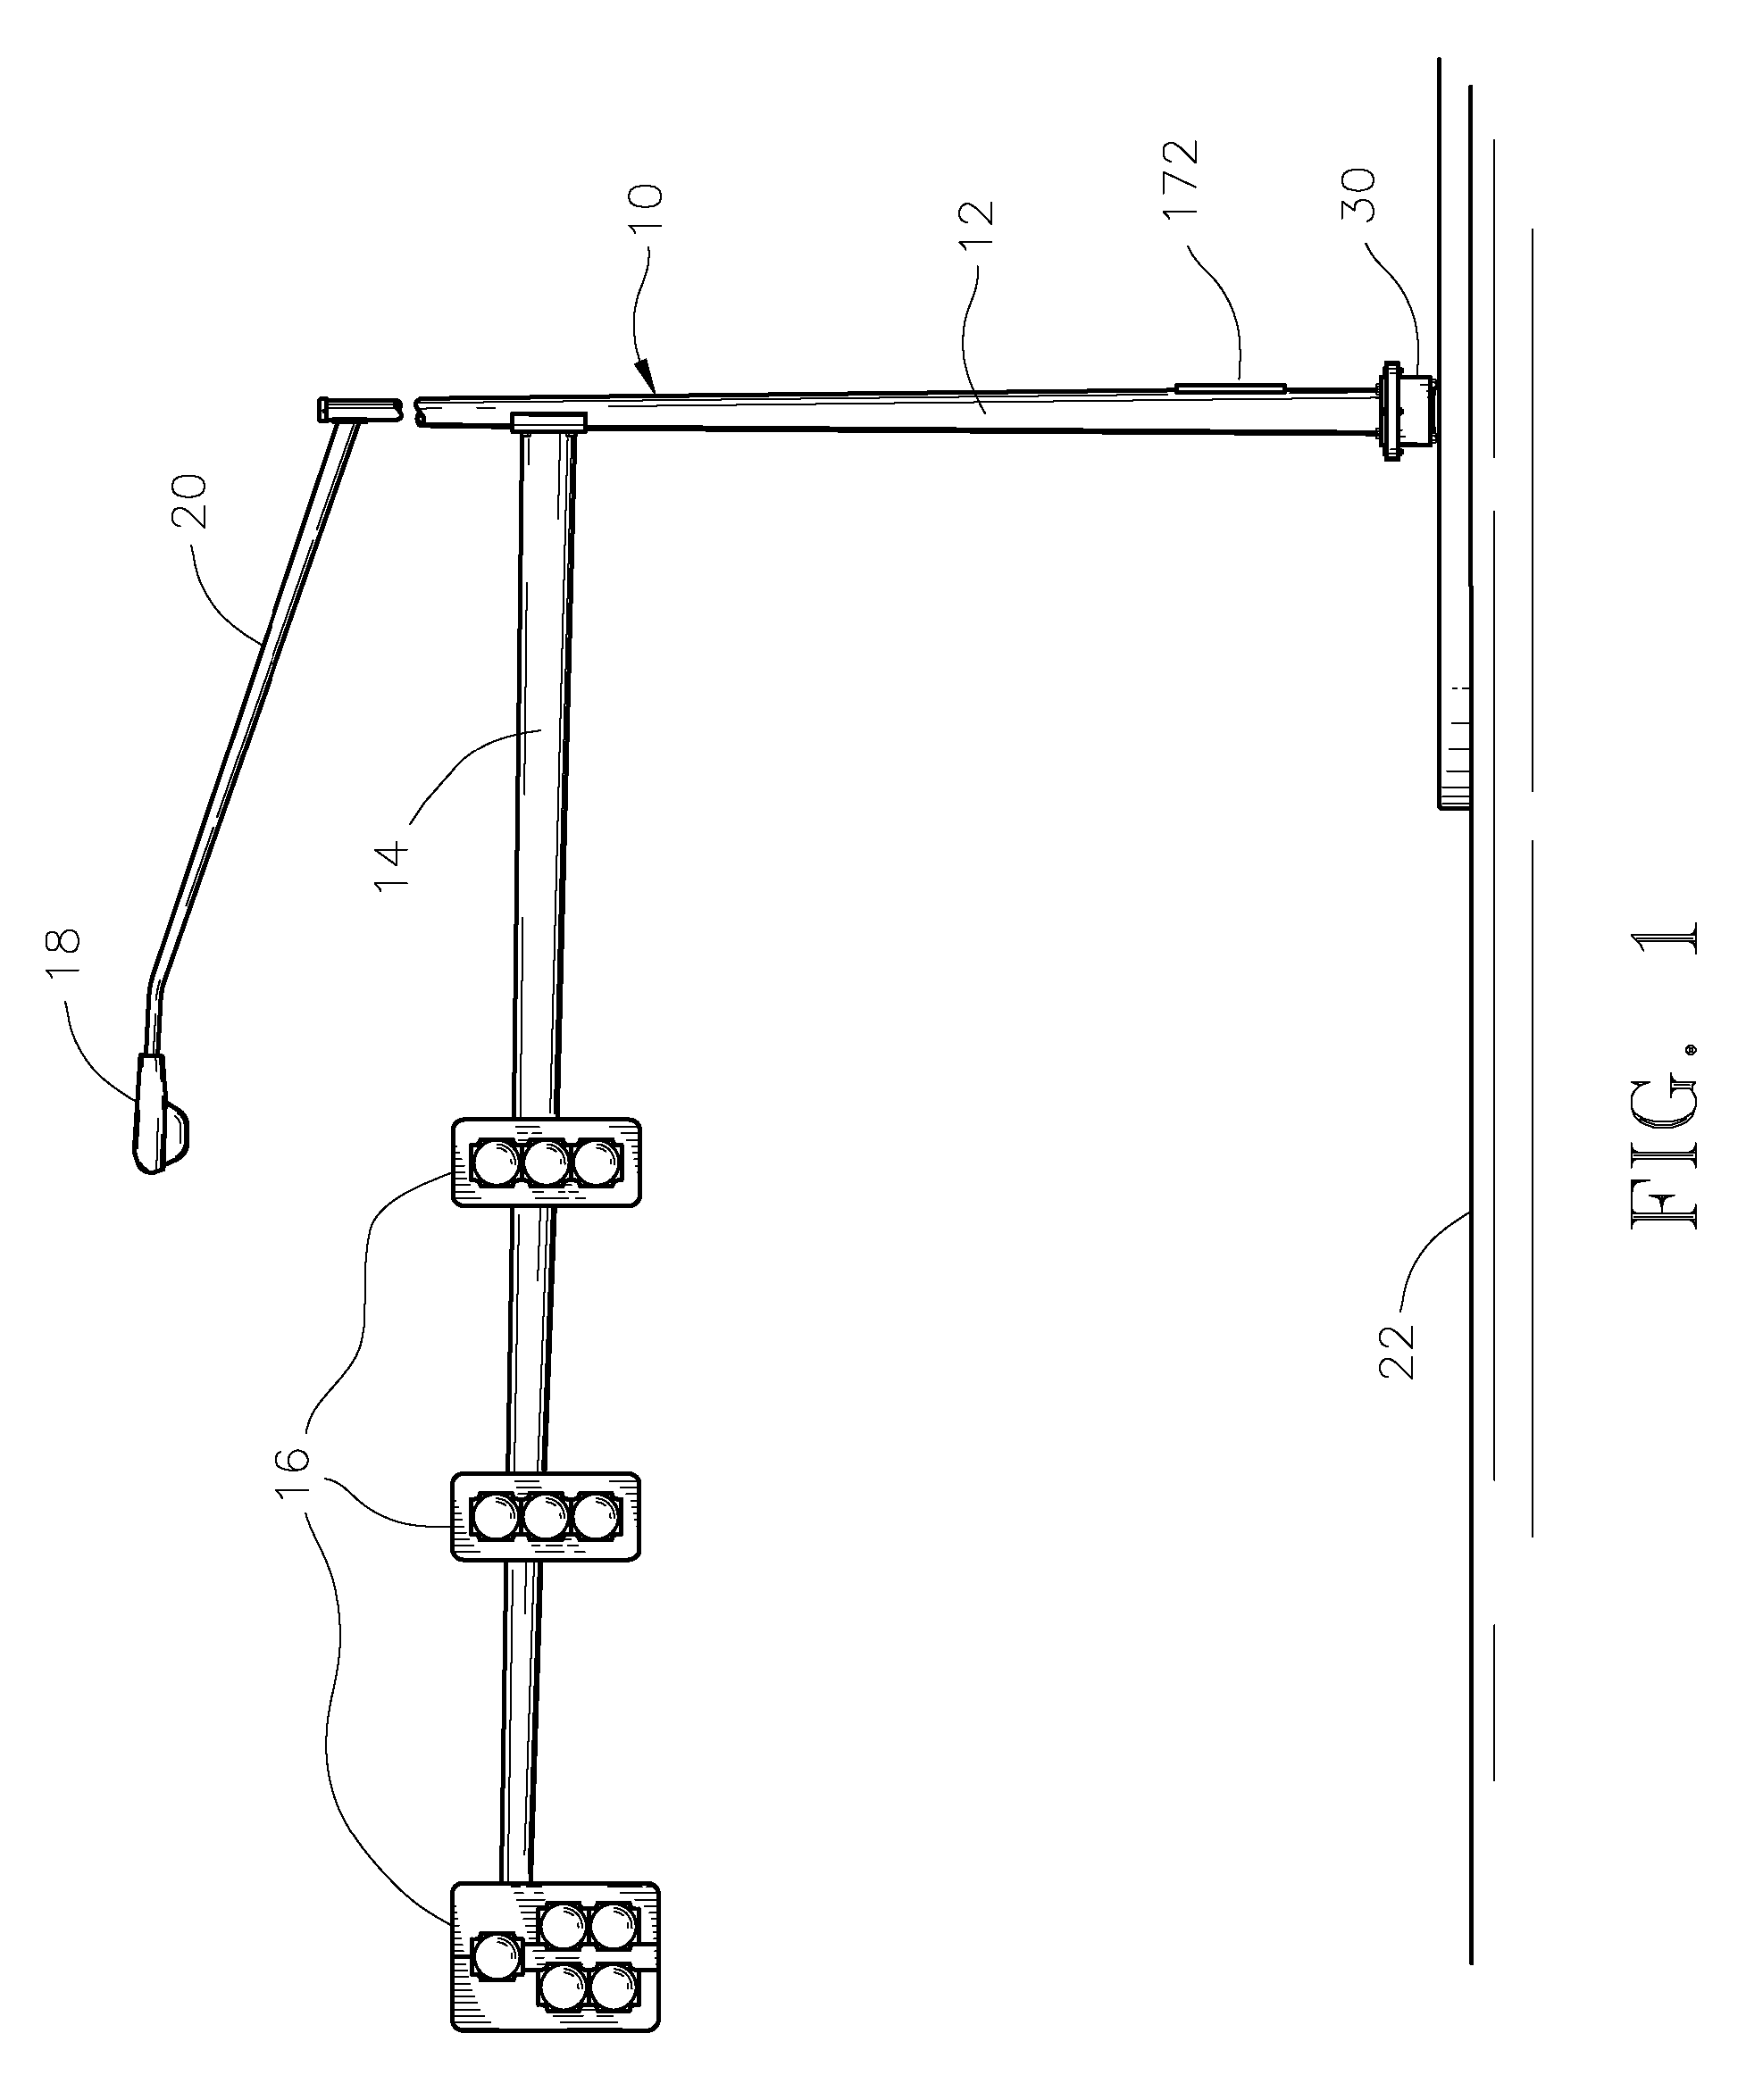 Pivot base assembly for traffic pole